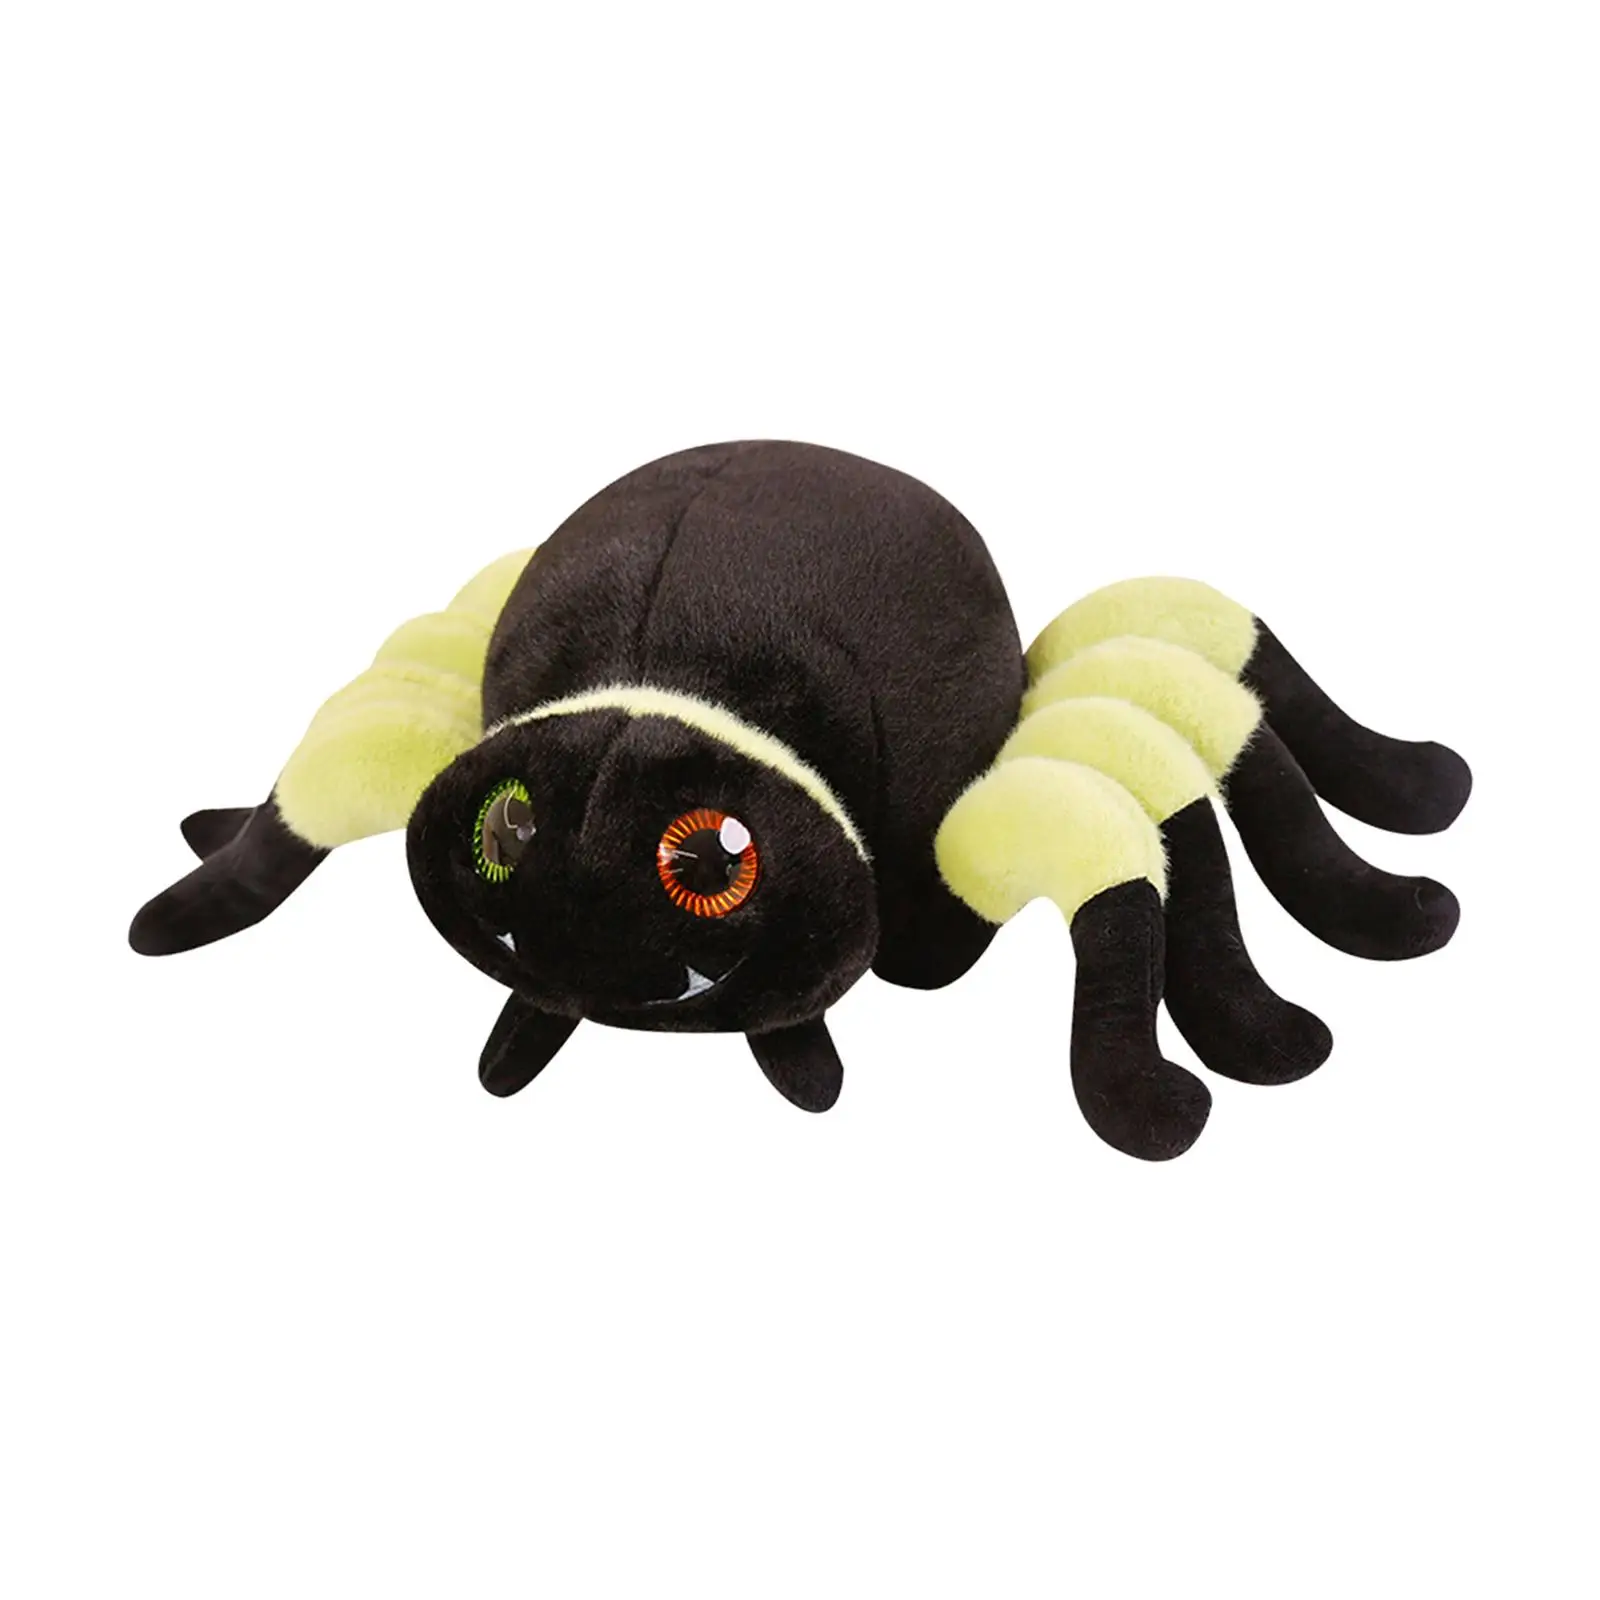 Soft Plush Animal Toy Spider Stuffed Animal Stuffed Animal Toy for Children Kids Adults Boys Girls Halloween Birthday Gift